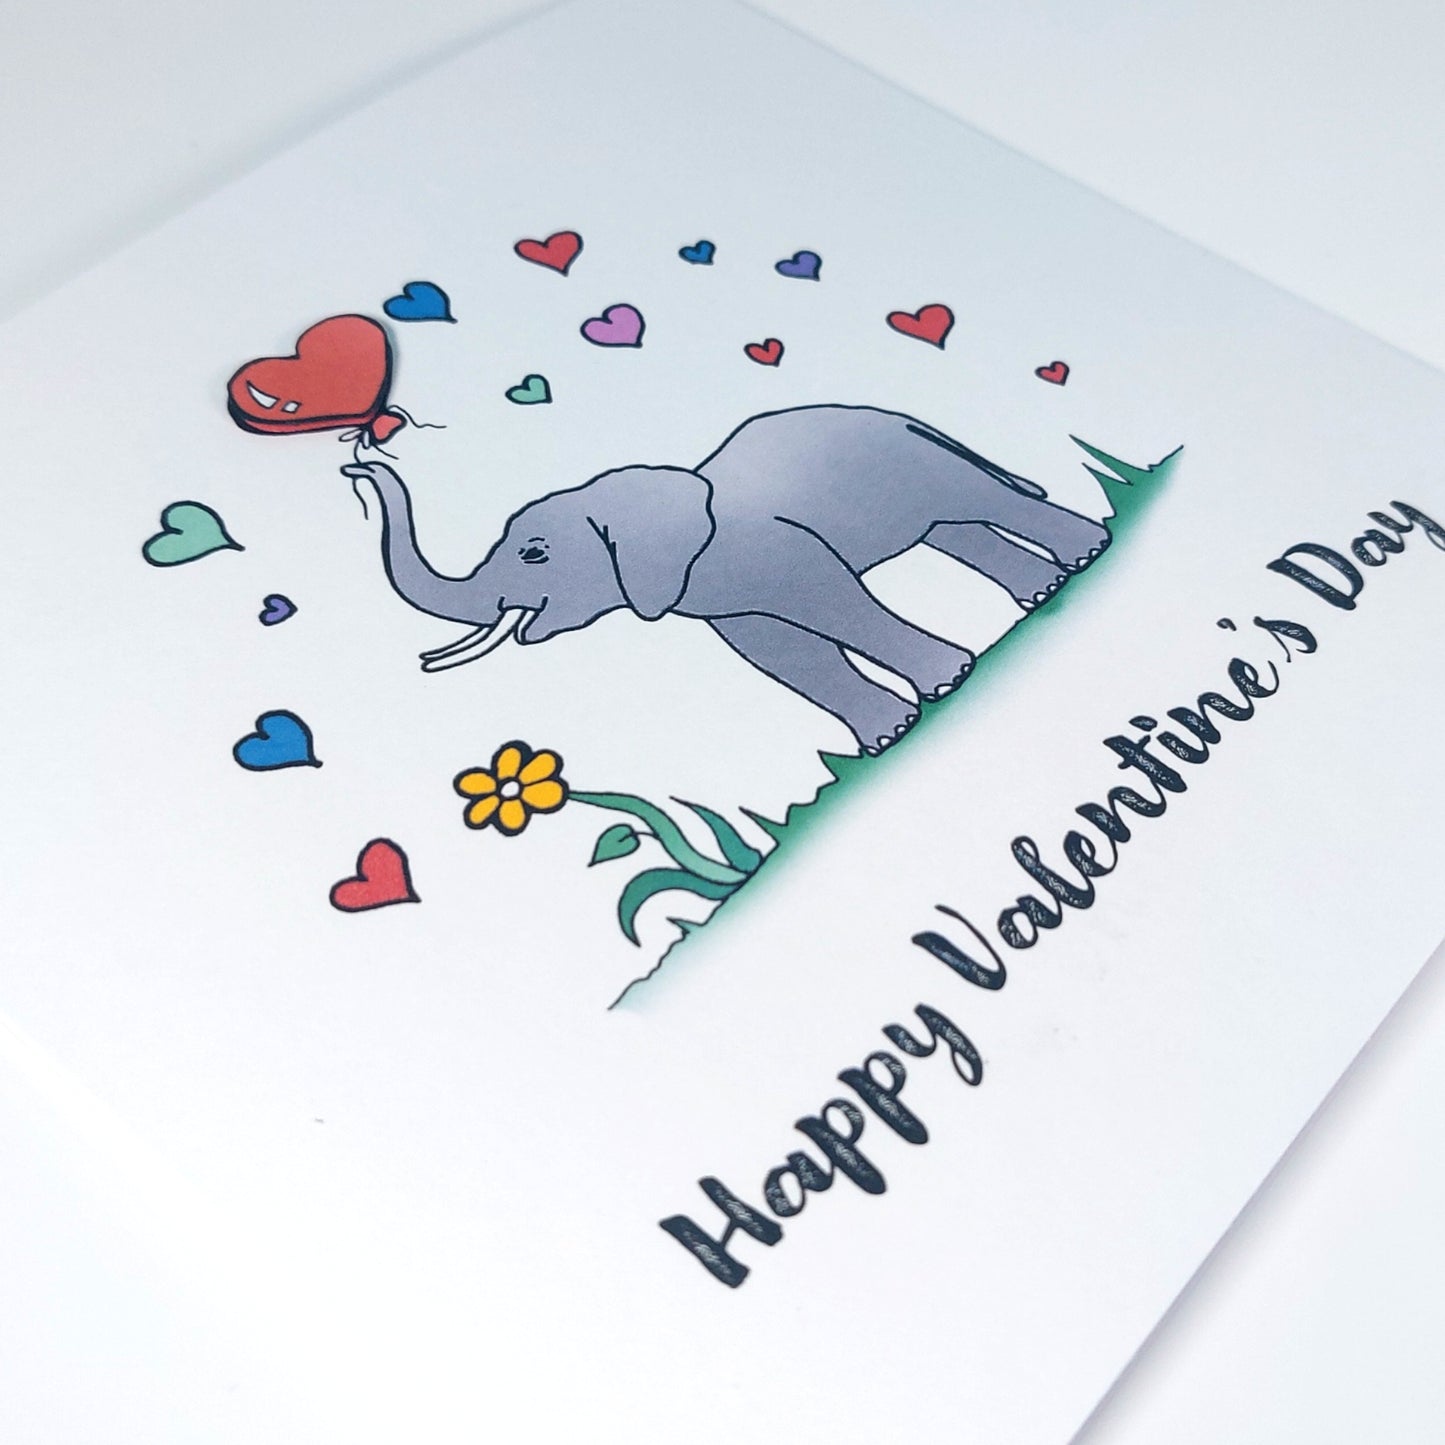 Elephant Happy Valentines Day Card